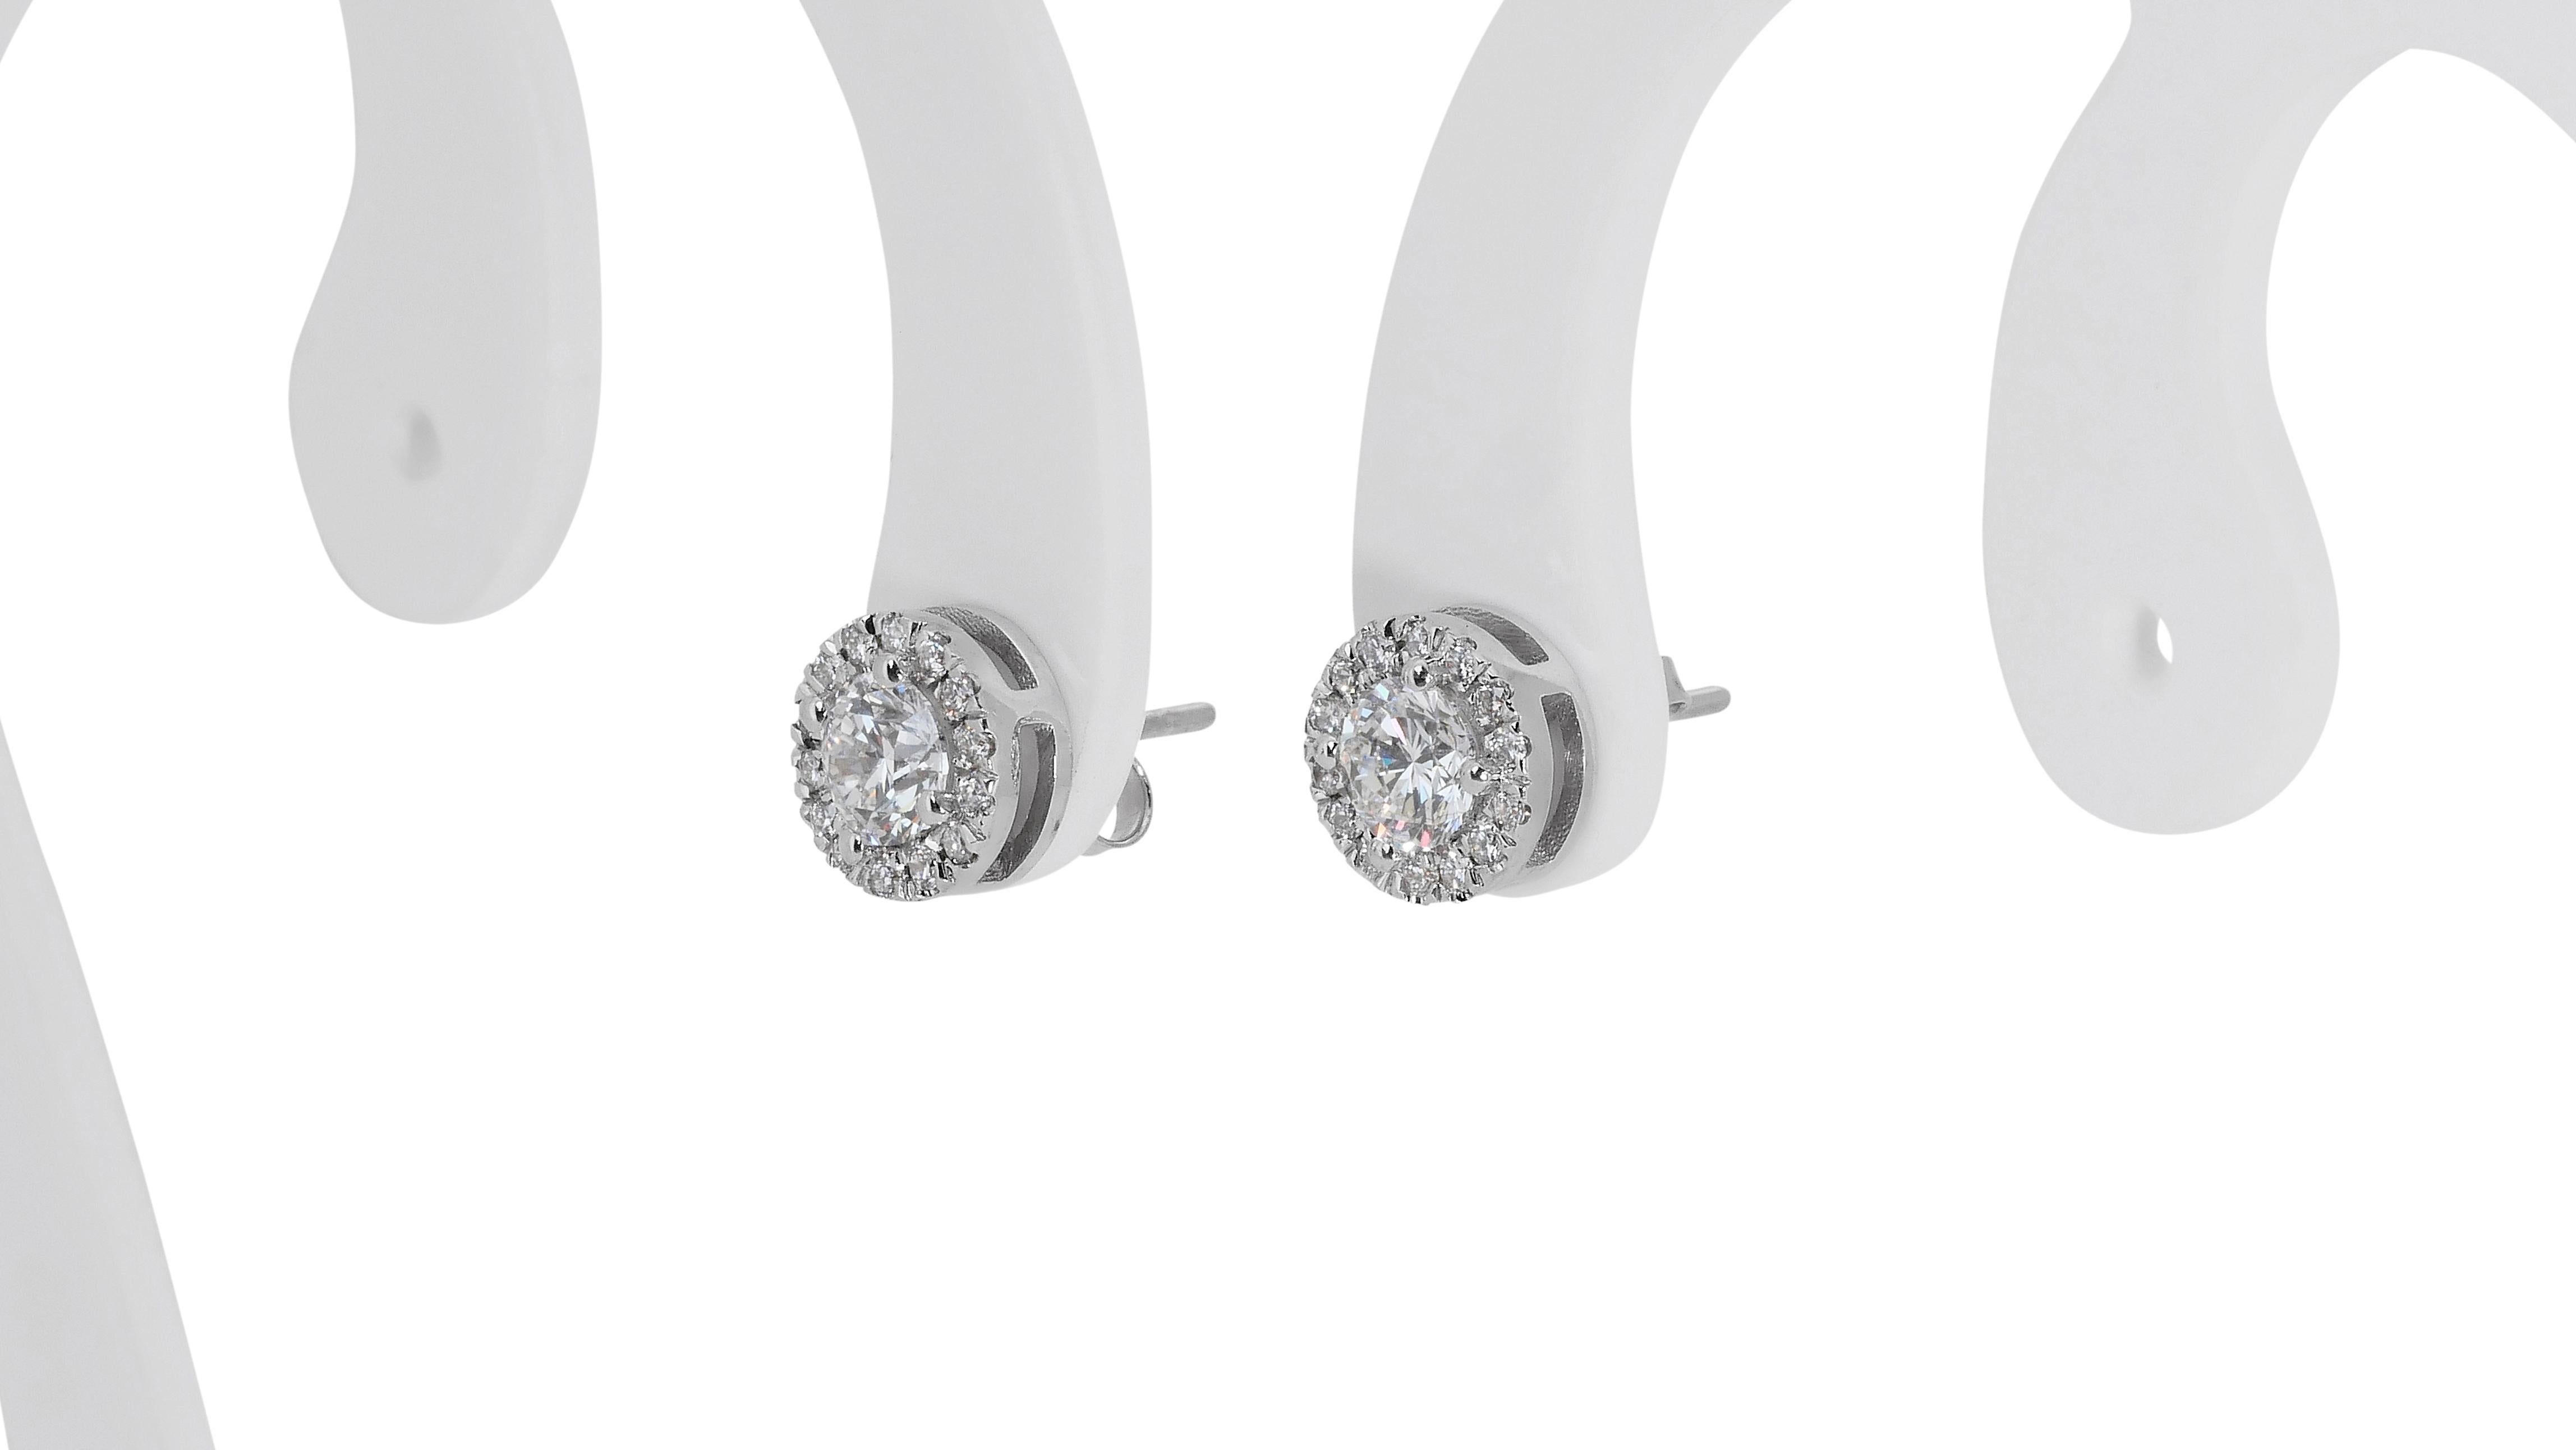 Glamorous 18k White Gold Halo Earrings w/ 1.05 Carat Natural Diamonds GIA Cert For Sale 1